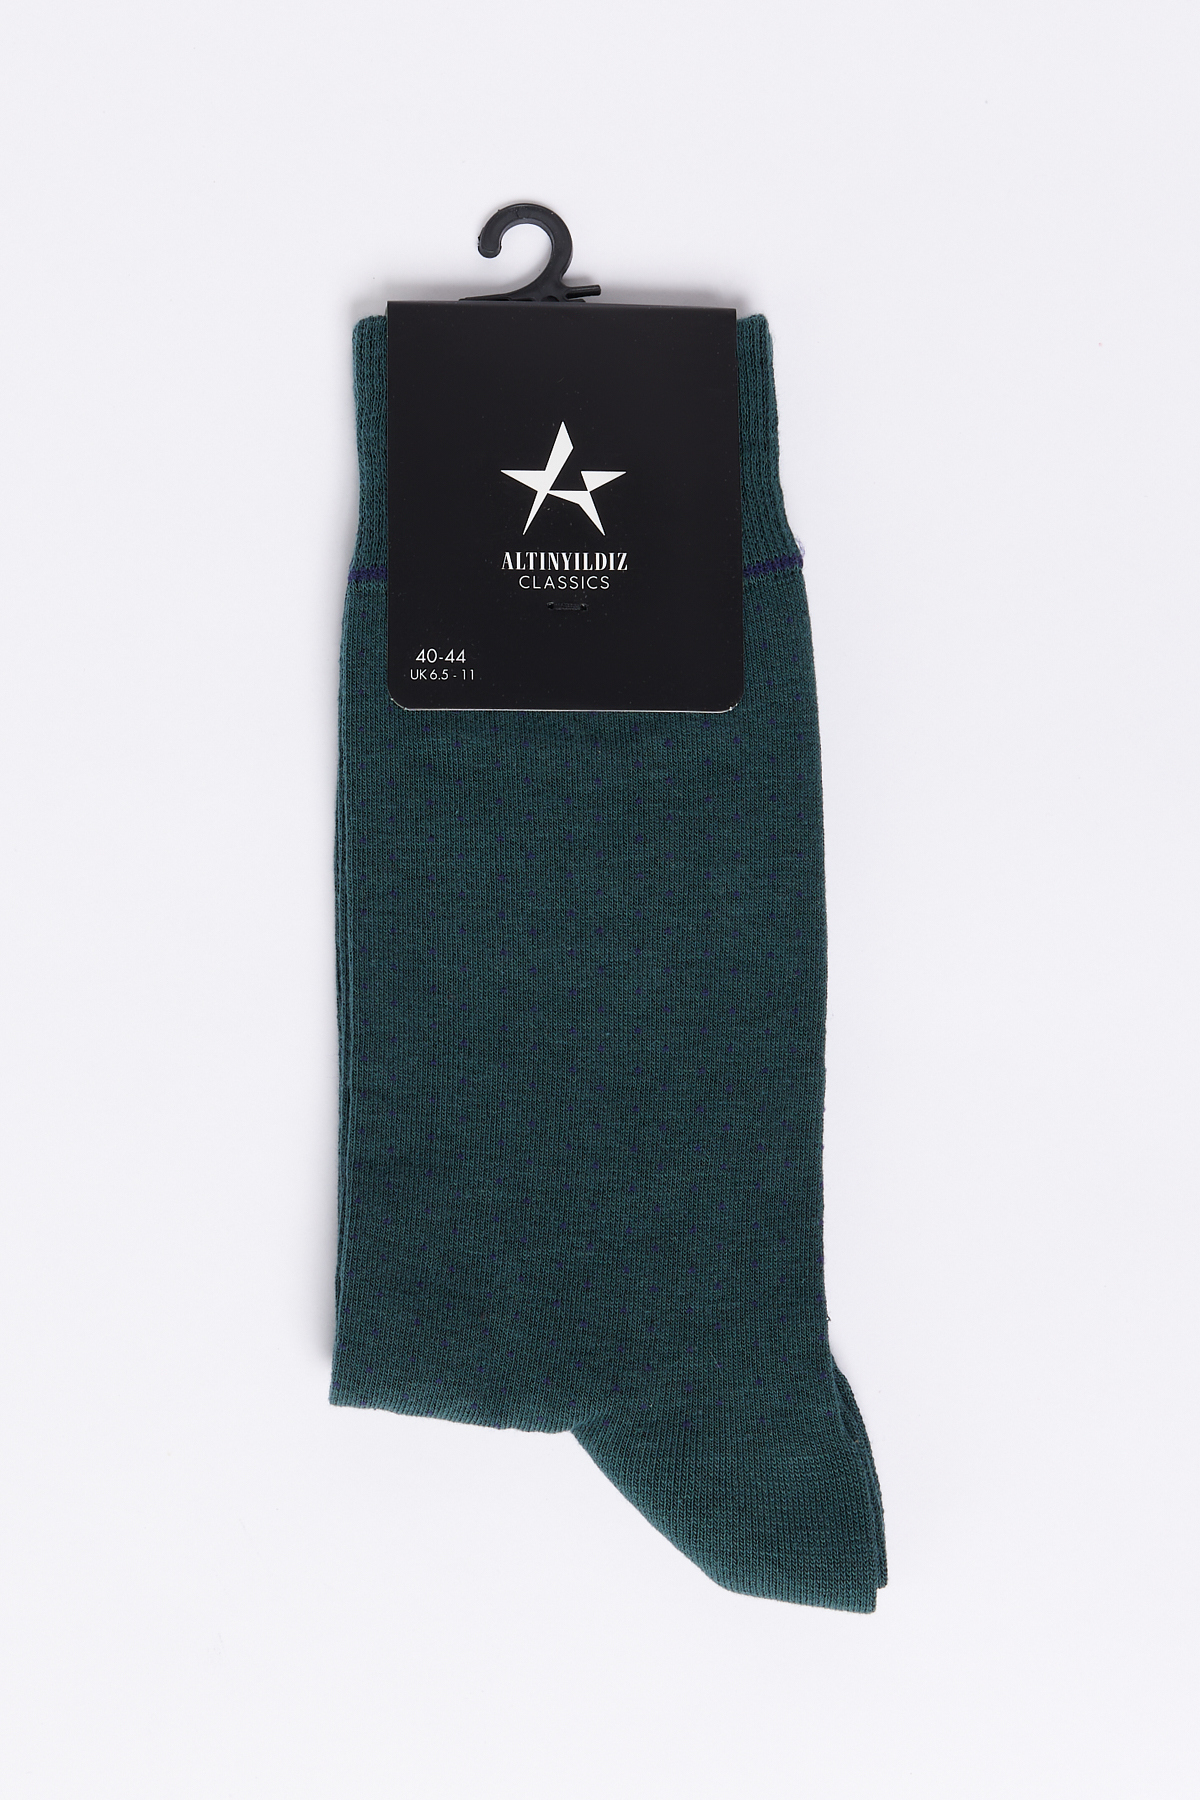 ALTINYILDIZ CLASSICS Men's Green-Navy Blue Patterned Bamboo Cleat Socks